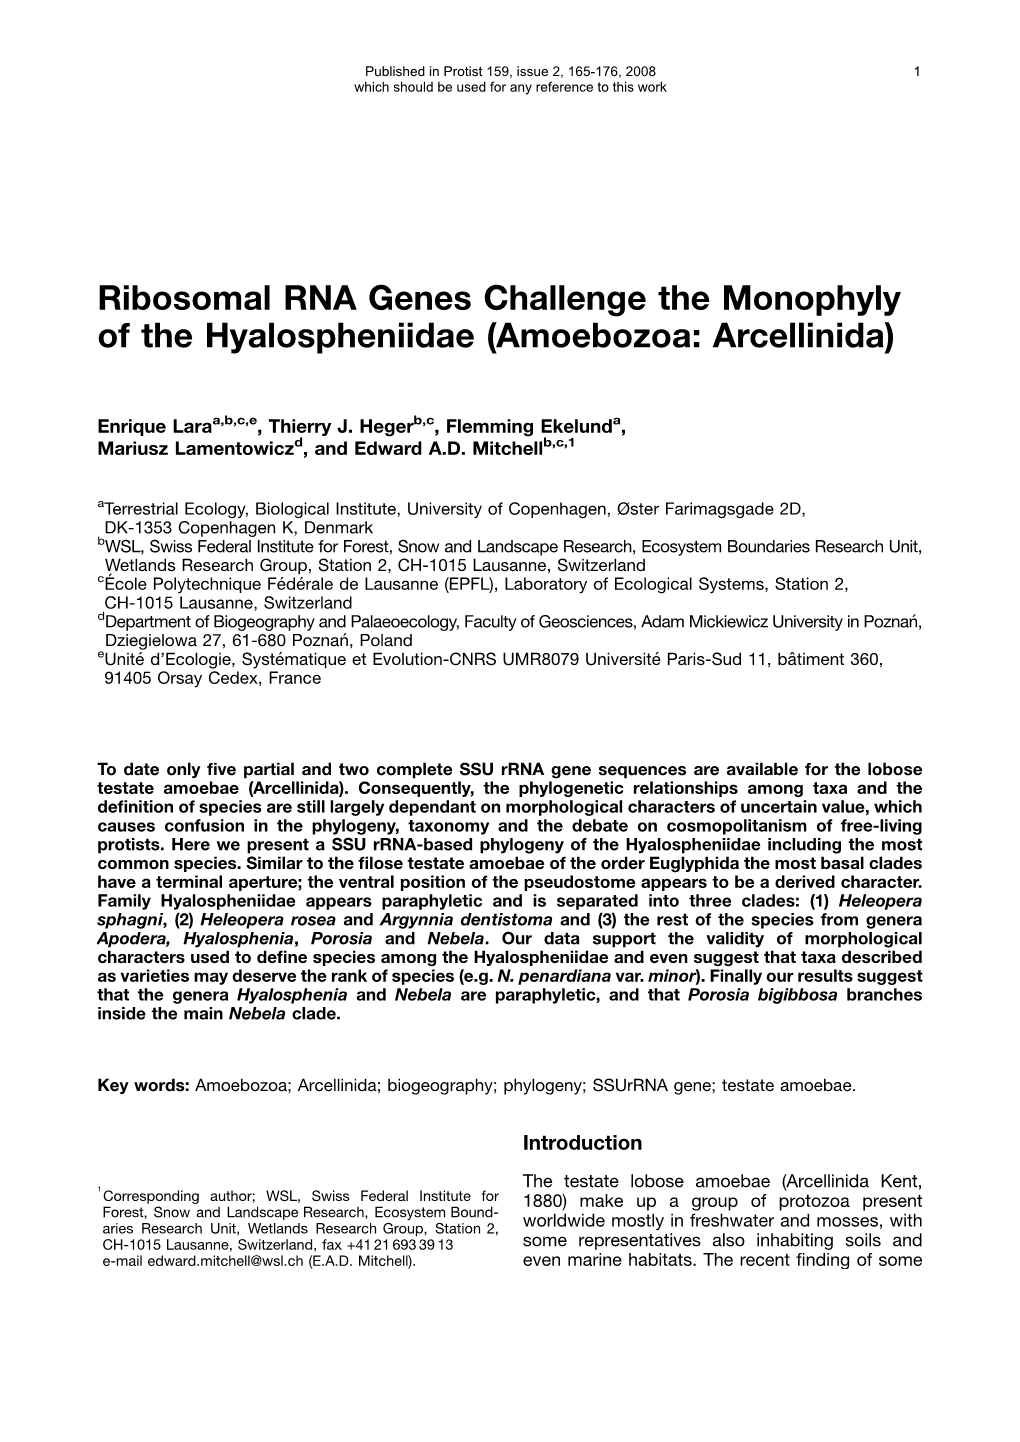 Ribosomal RNA Genes Challenge the Monophyly of the Hyalospheniidae (Amoebozoa: Arcellinida)